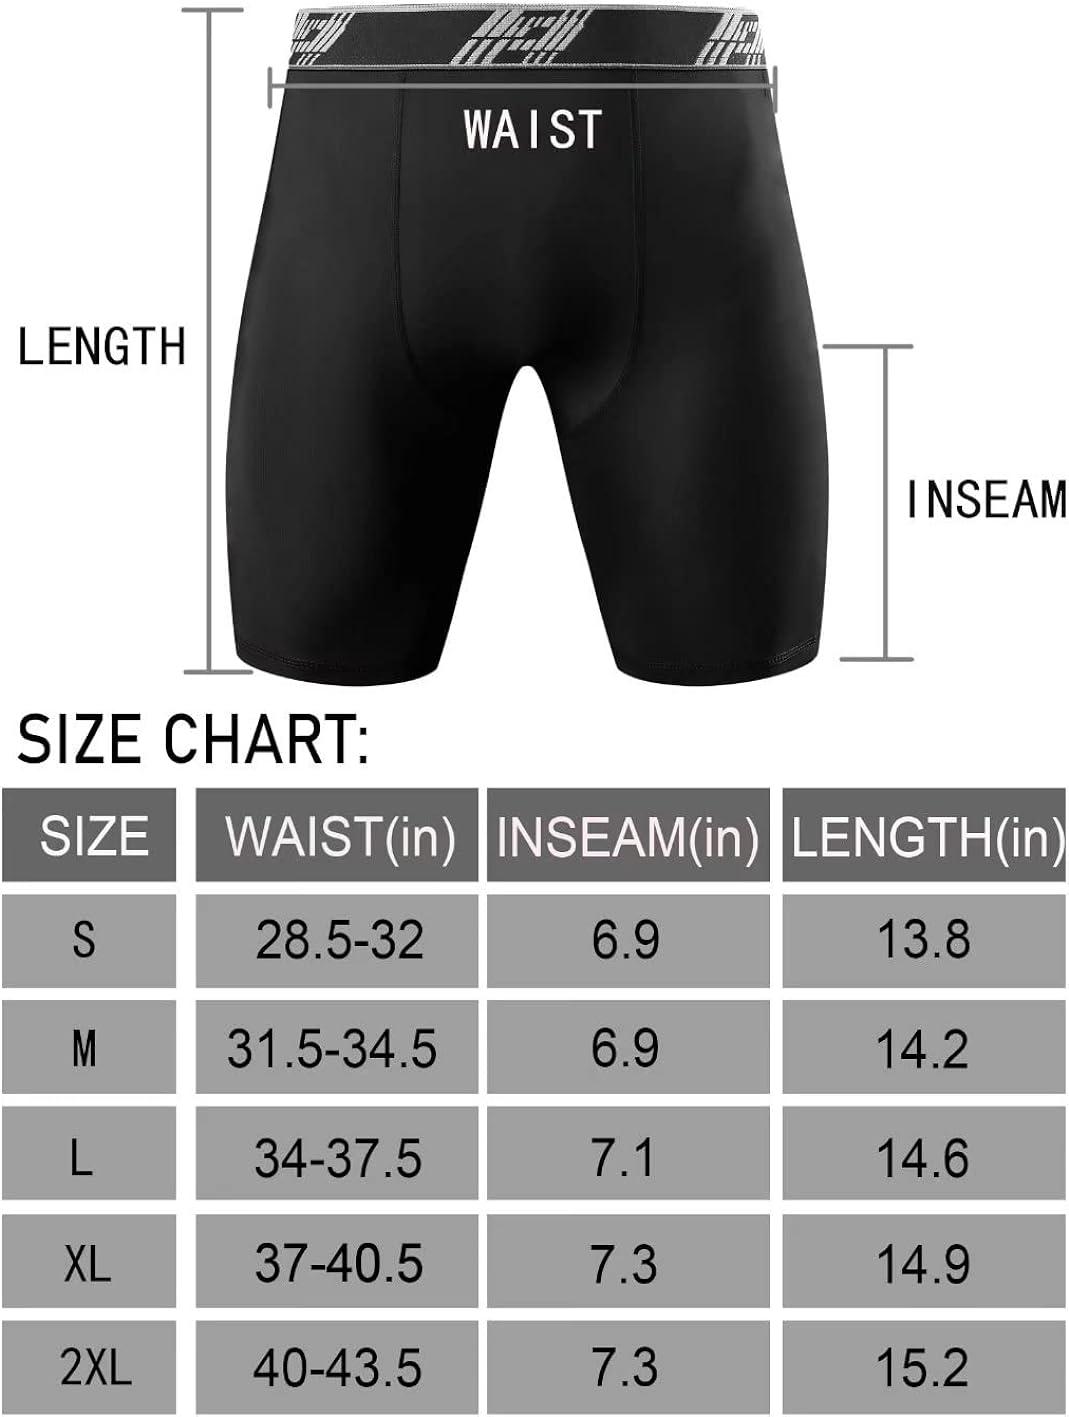 HOPLYNN 4/6 Pack Compression Shorts Men Underwear Spandex Sport Shorts  Athletic Workout Running Performance Baselayer Shorts 4 Pack Black Medium